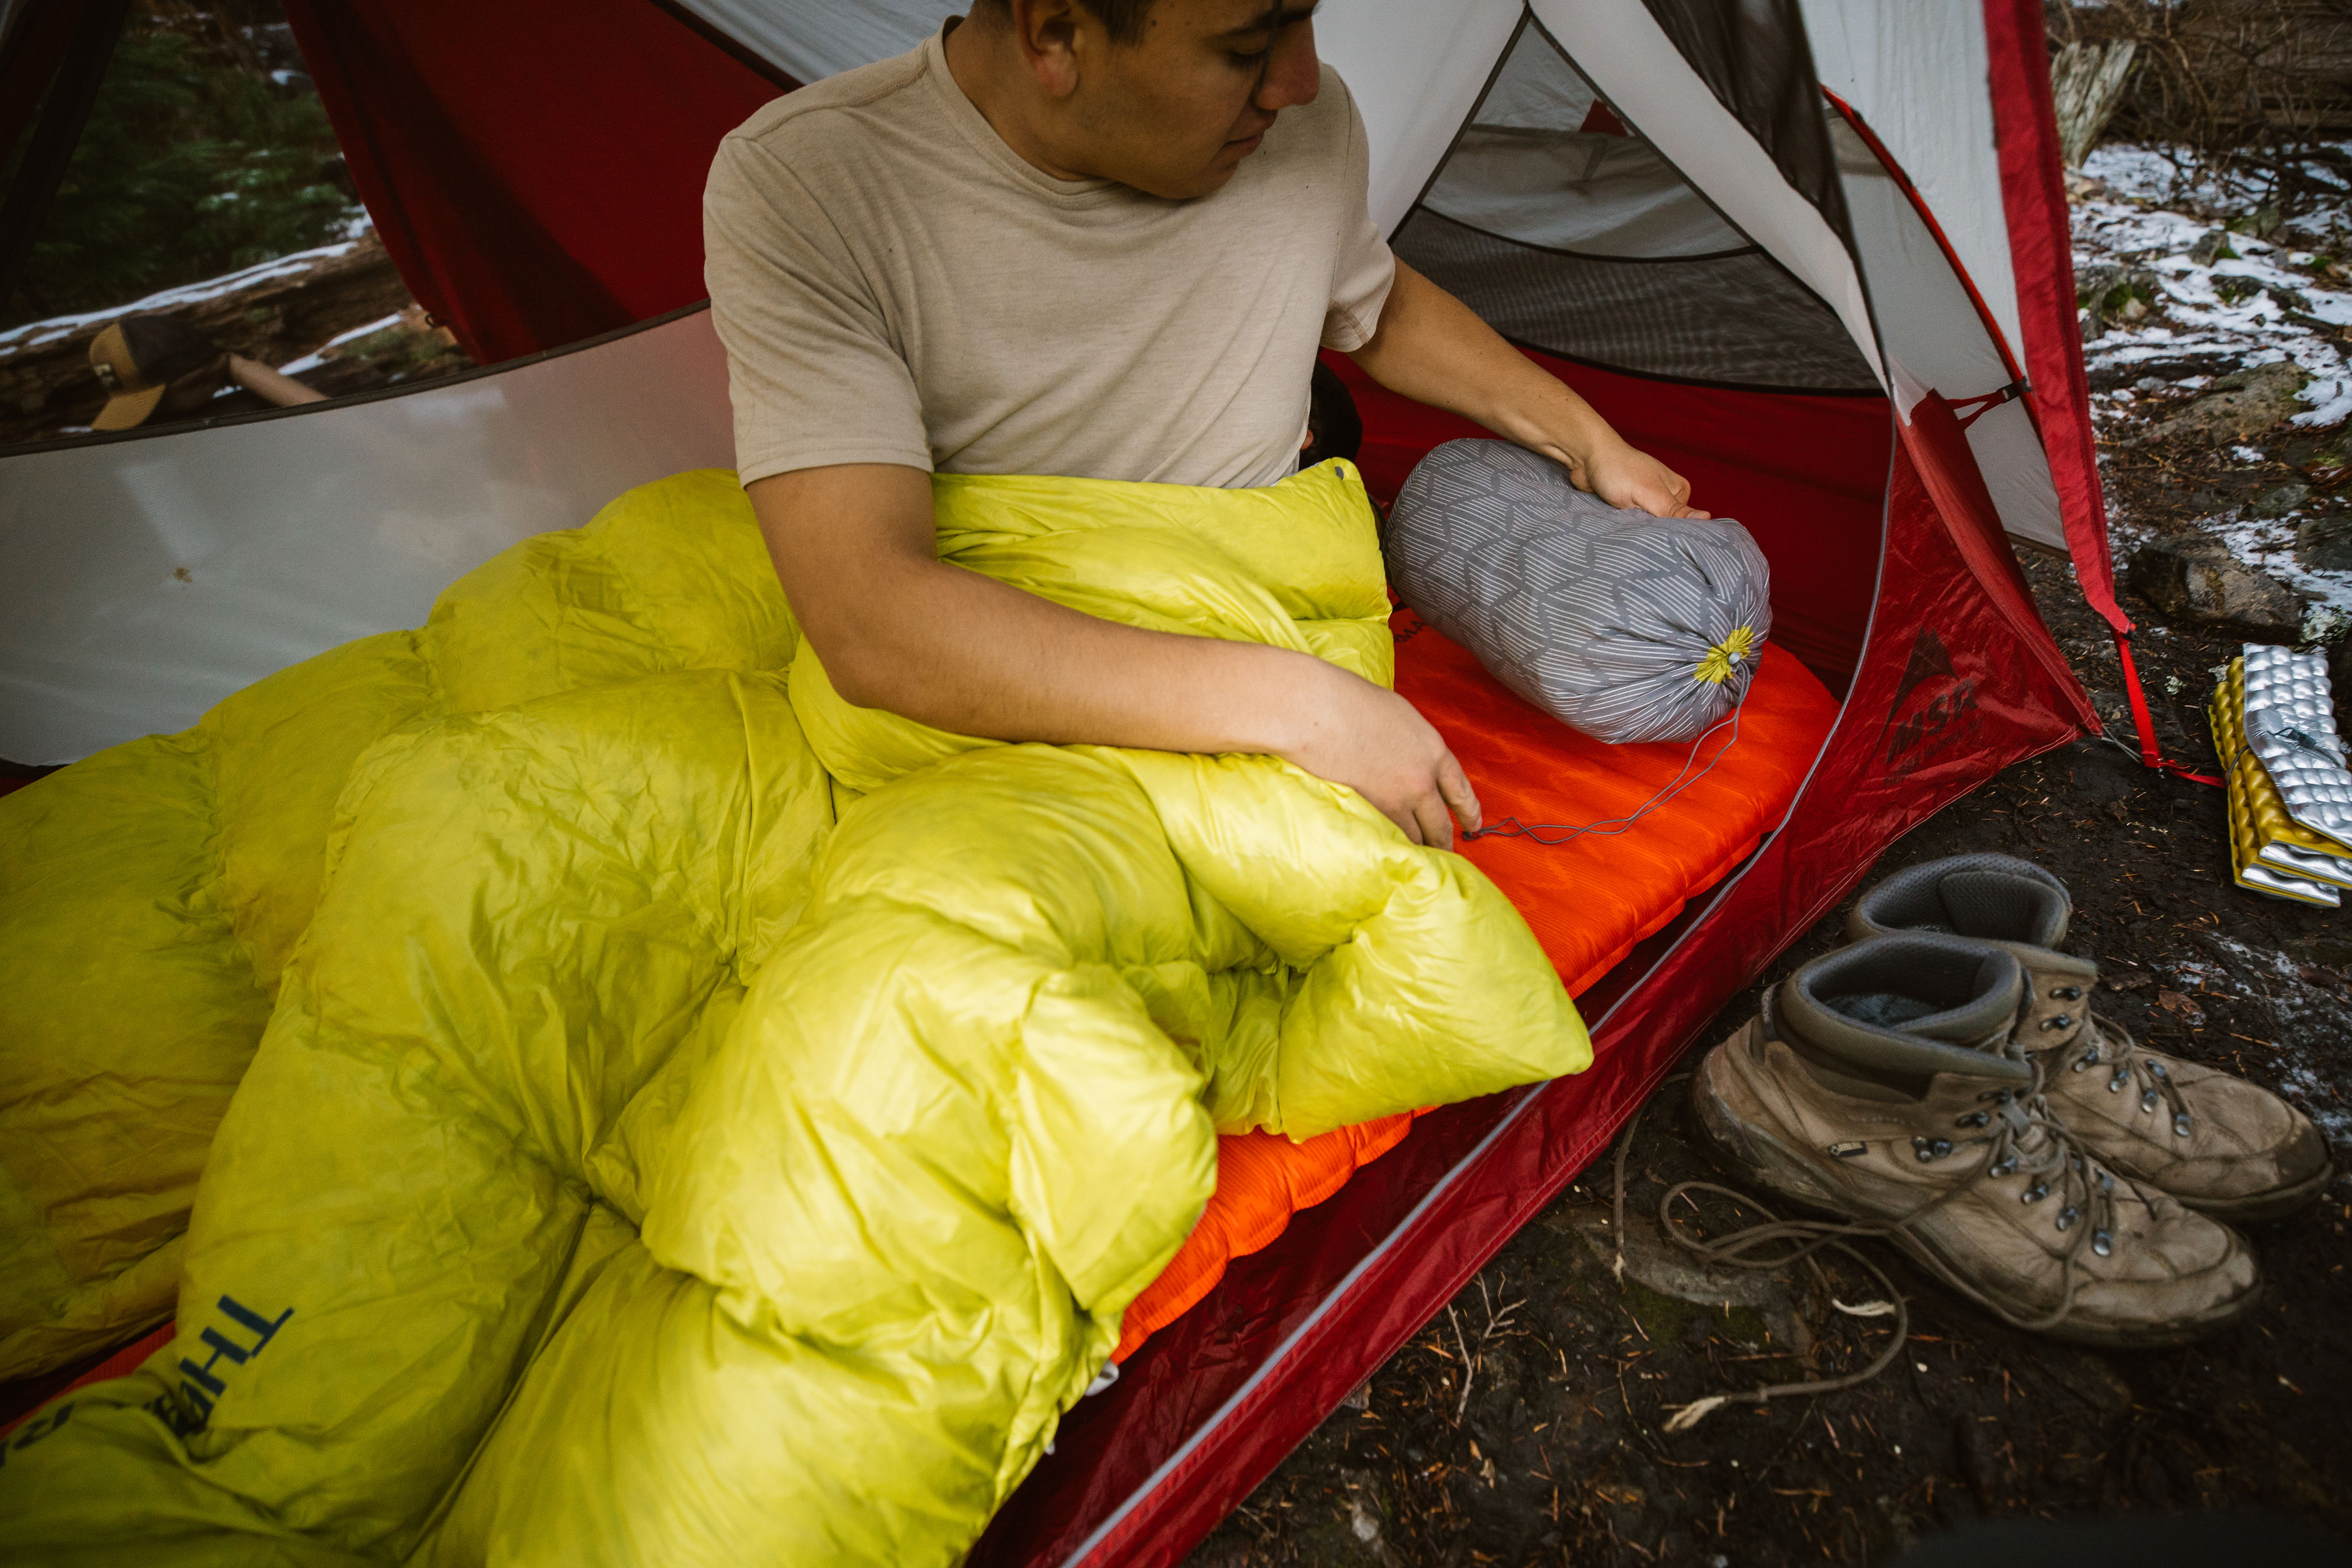 camping sleeping bag mats